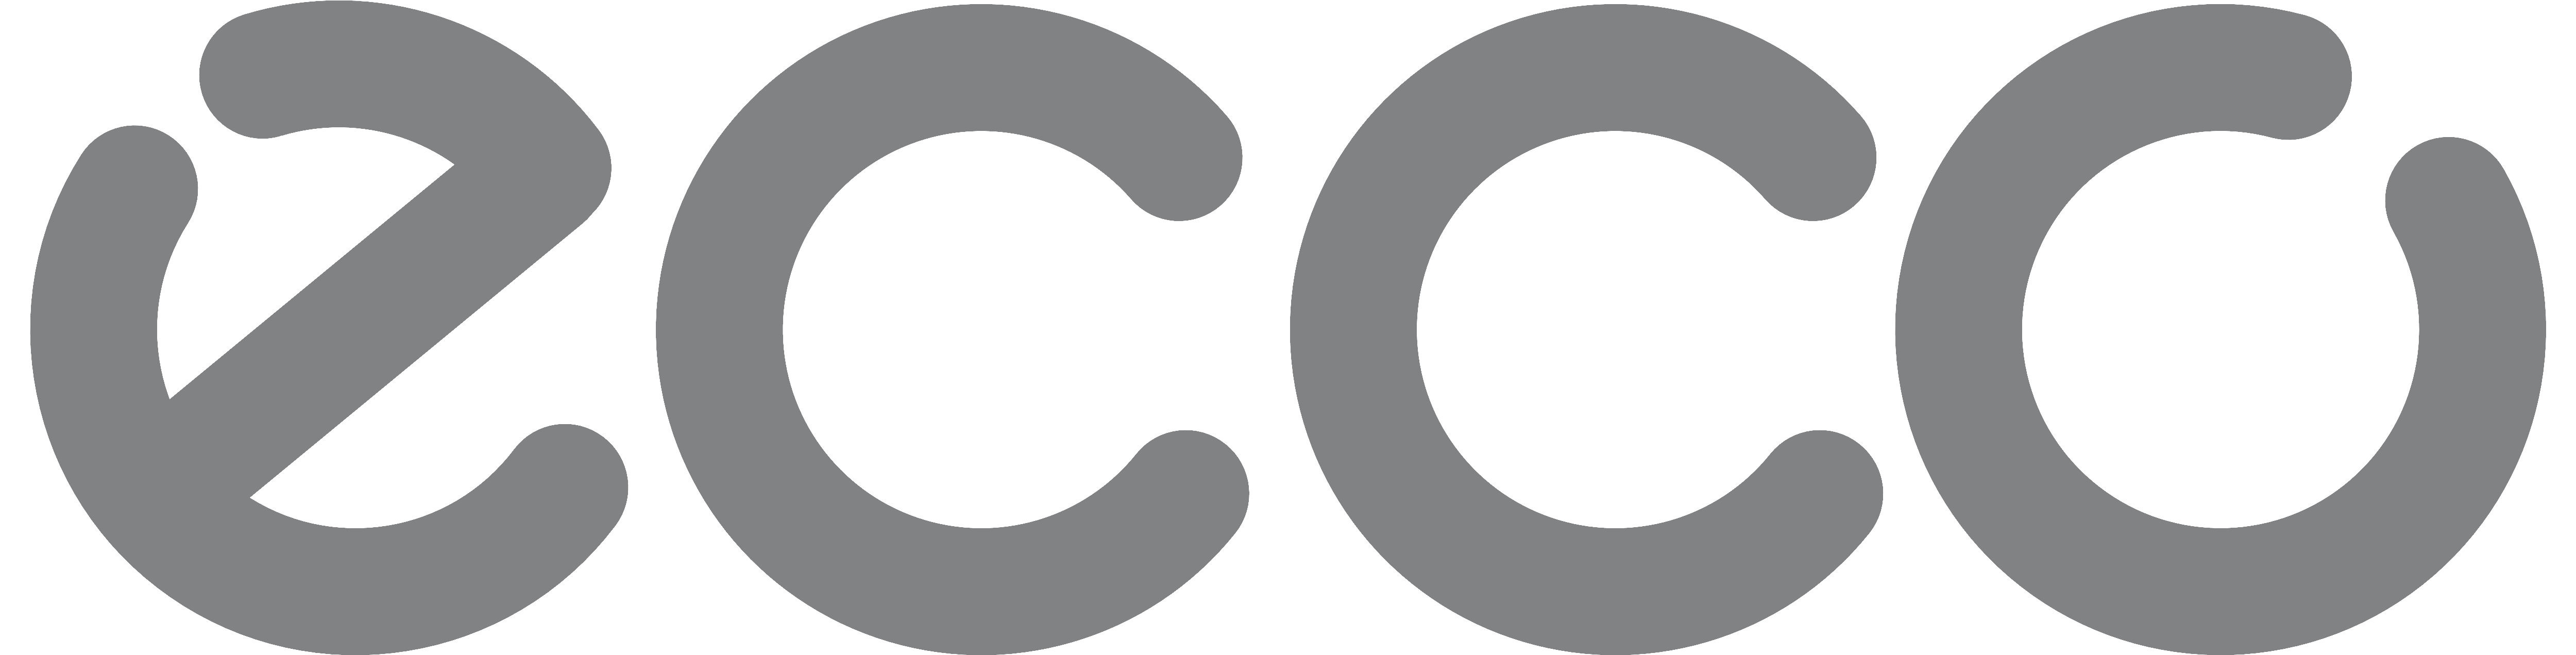 ECCO Brand Logo